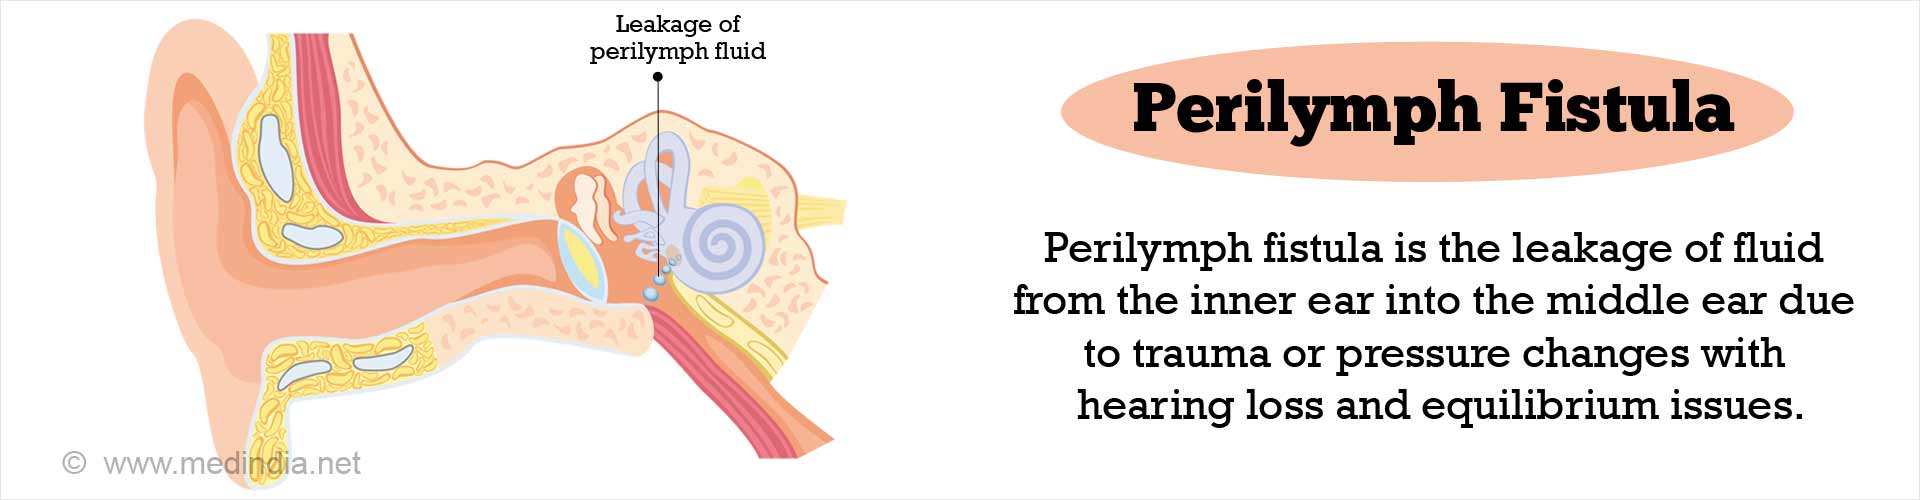 Perilymph Fistula
